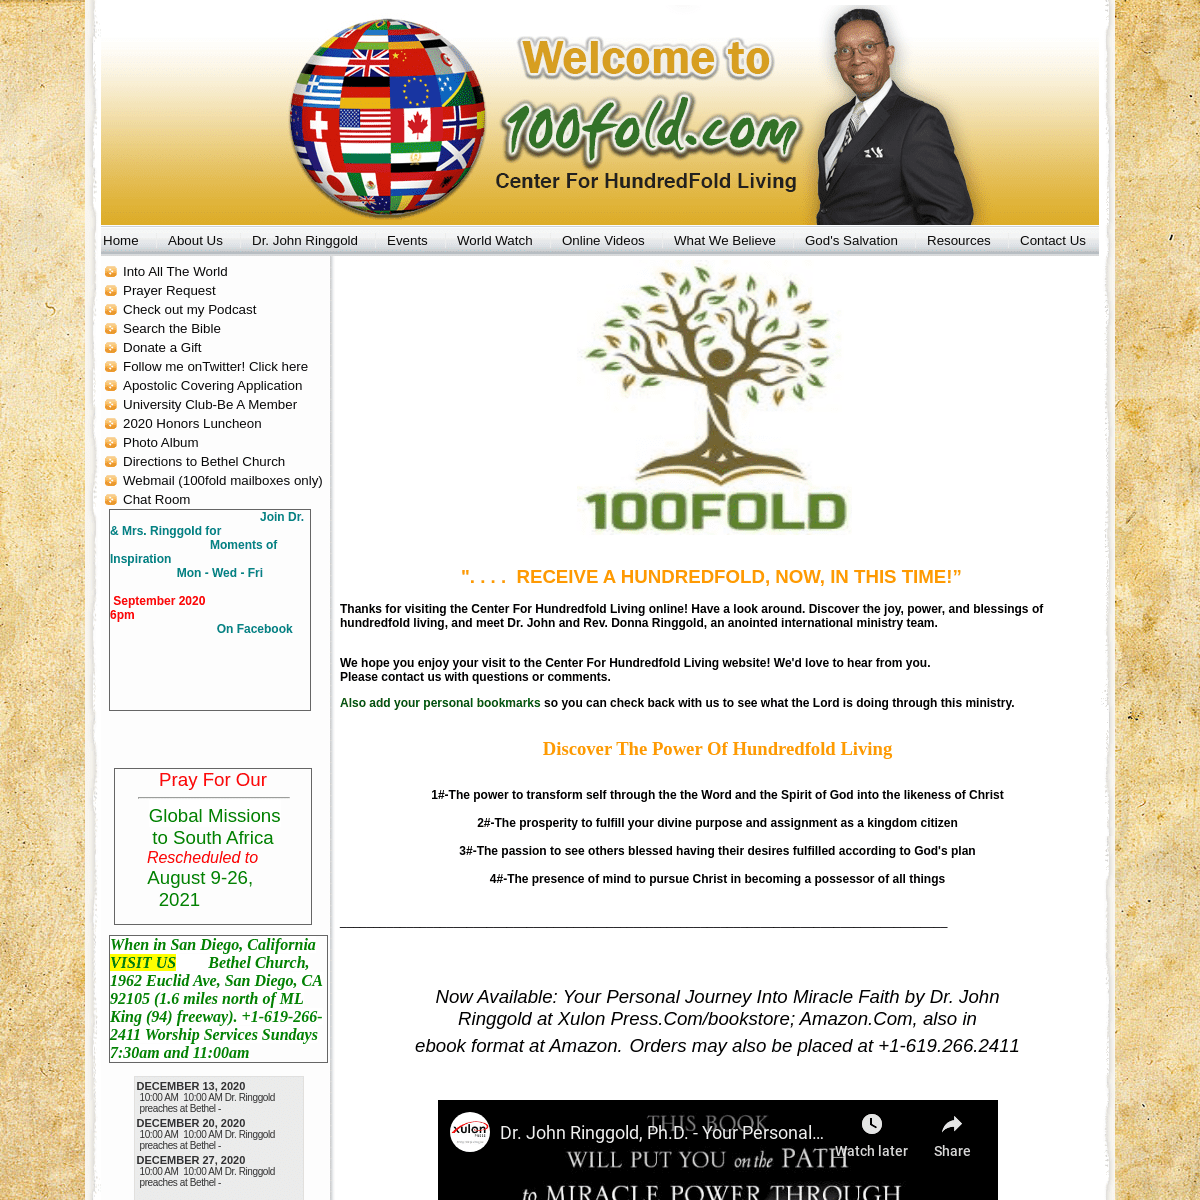 A complete backup of 100fold.com